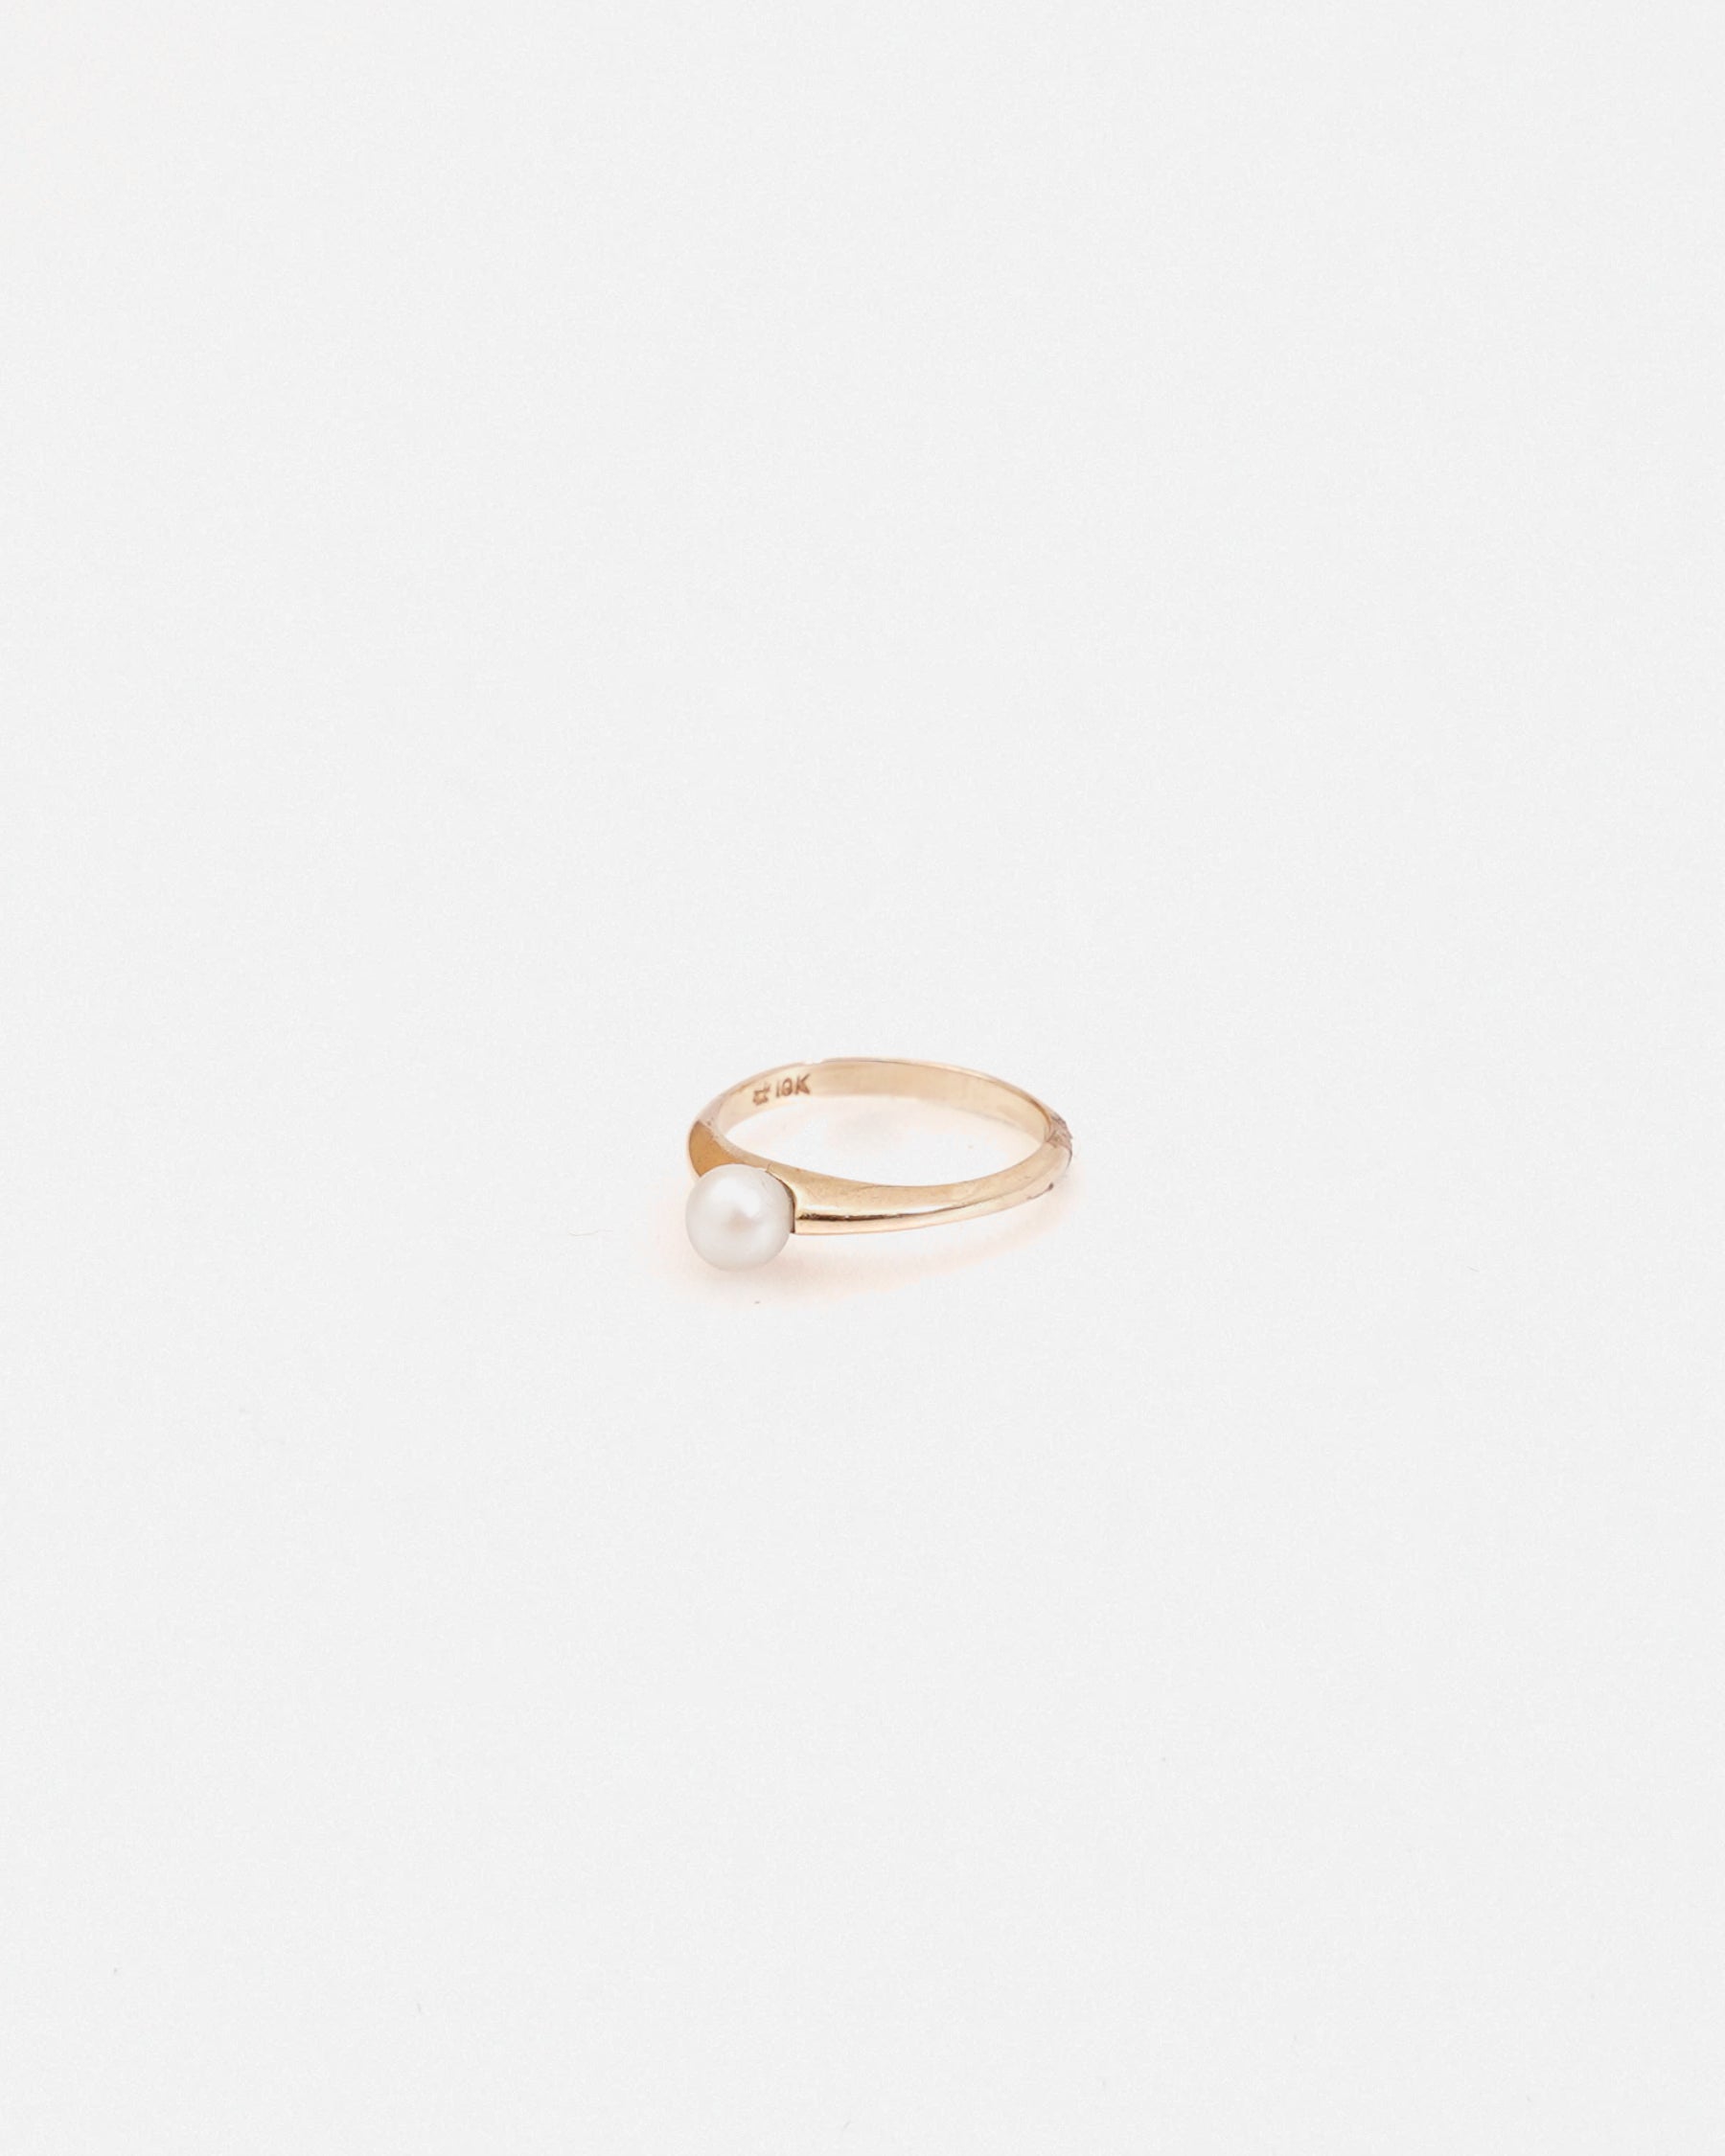 10k Gold Ring : size10